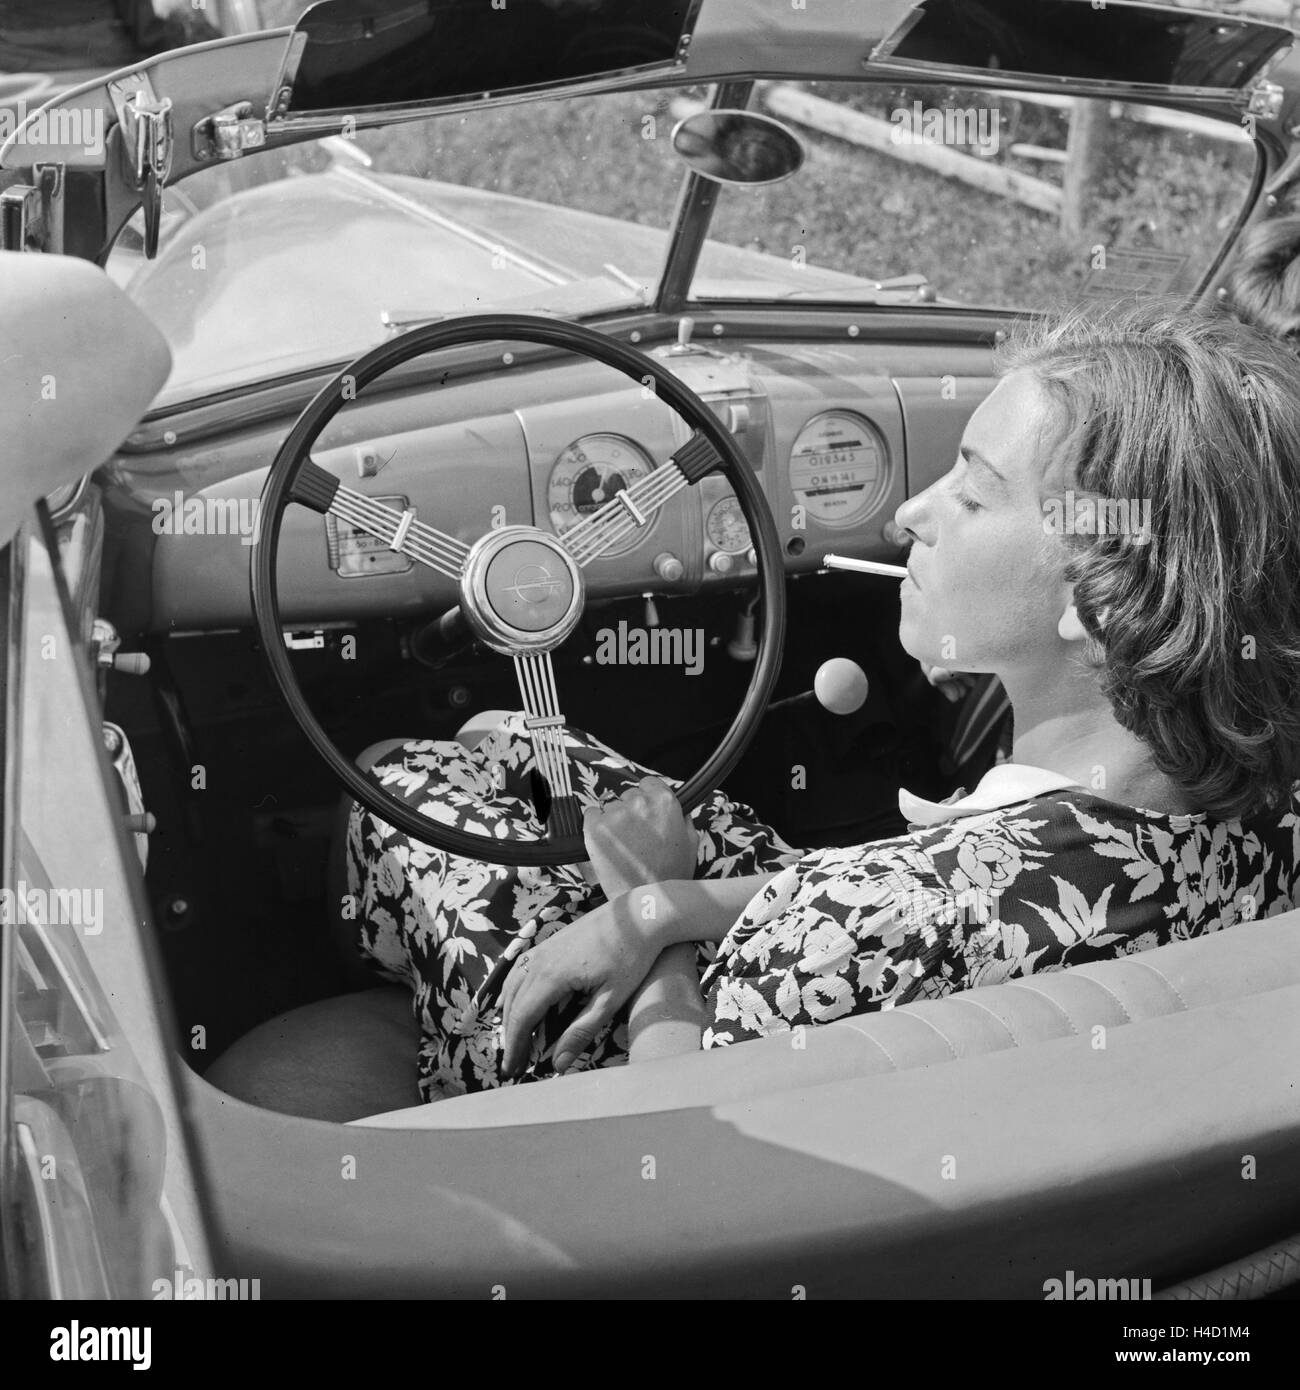 Eine junge Frau raucht am Steuer von Opel Olympia, Deuitschland 1930er Jahre. Un ypung femme fumant dans son modèle Opel Olympia, Allemagne 1930. Banque D'Images